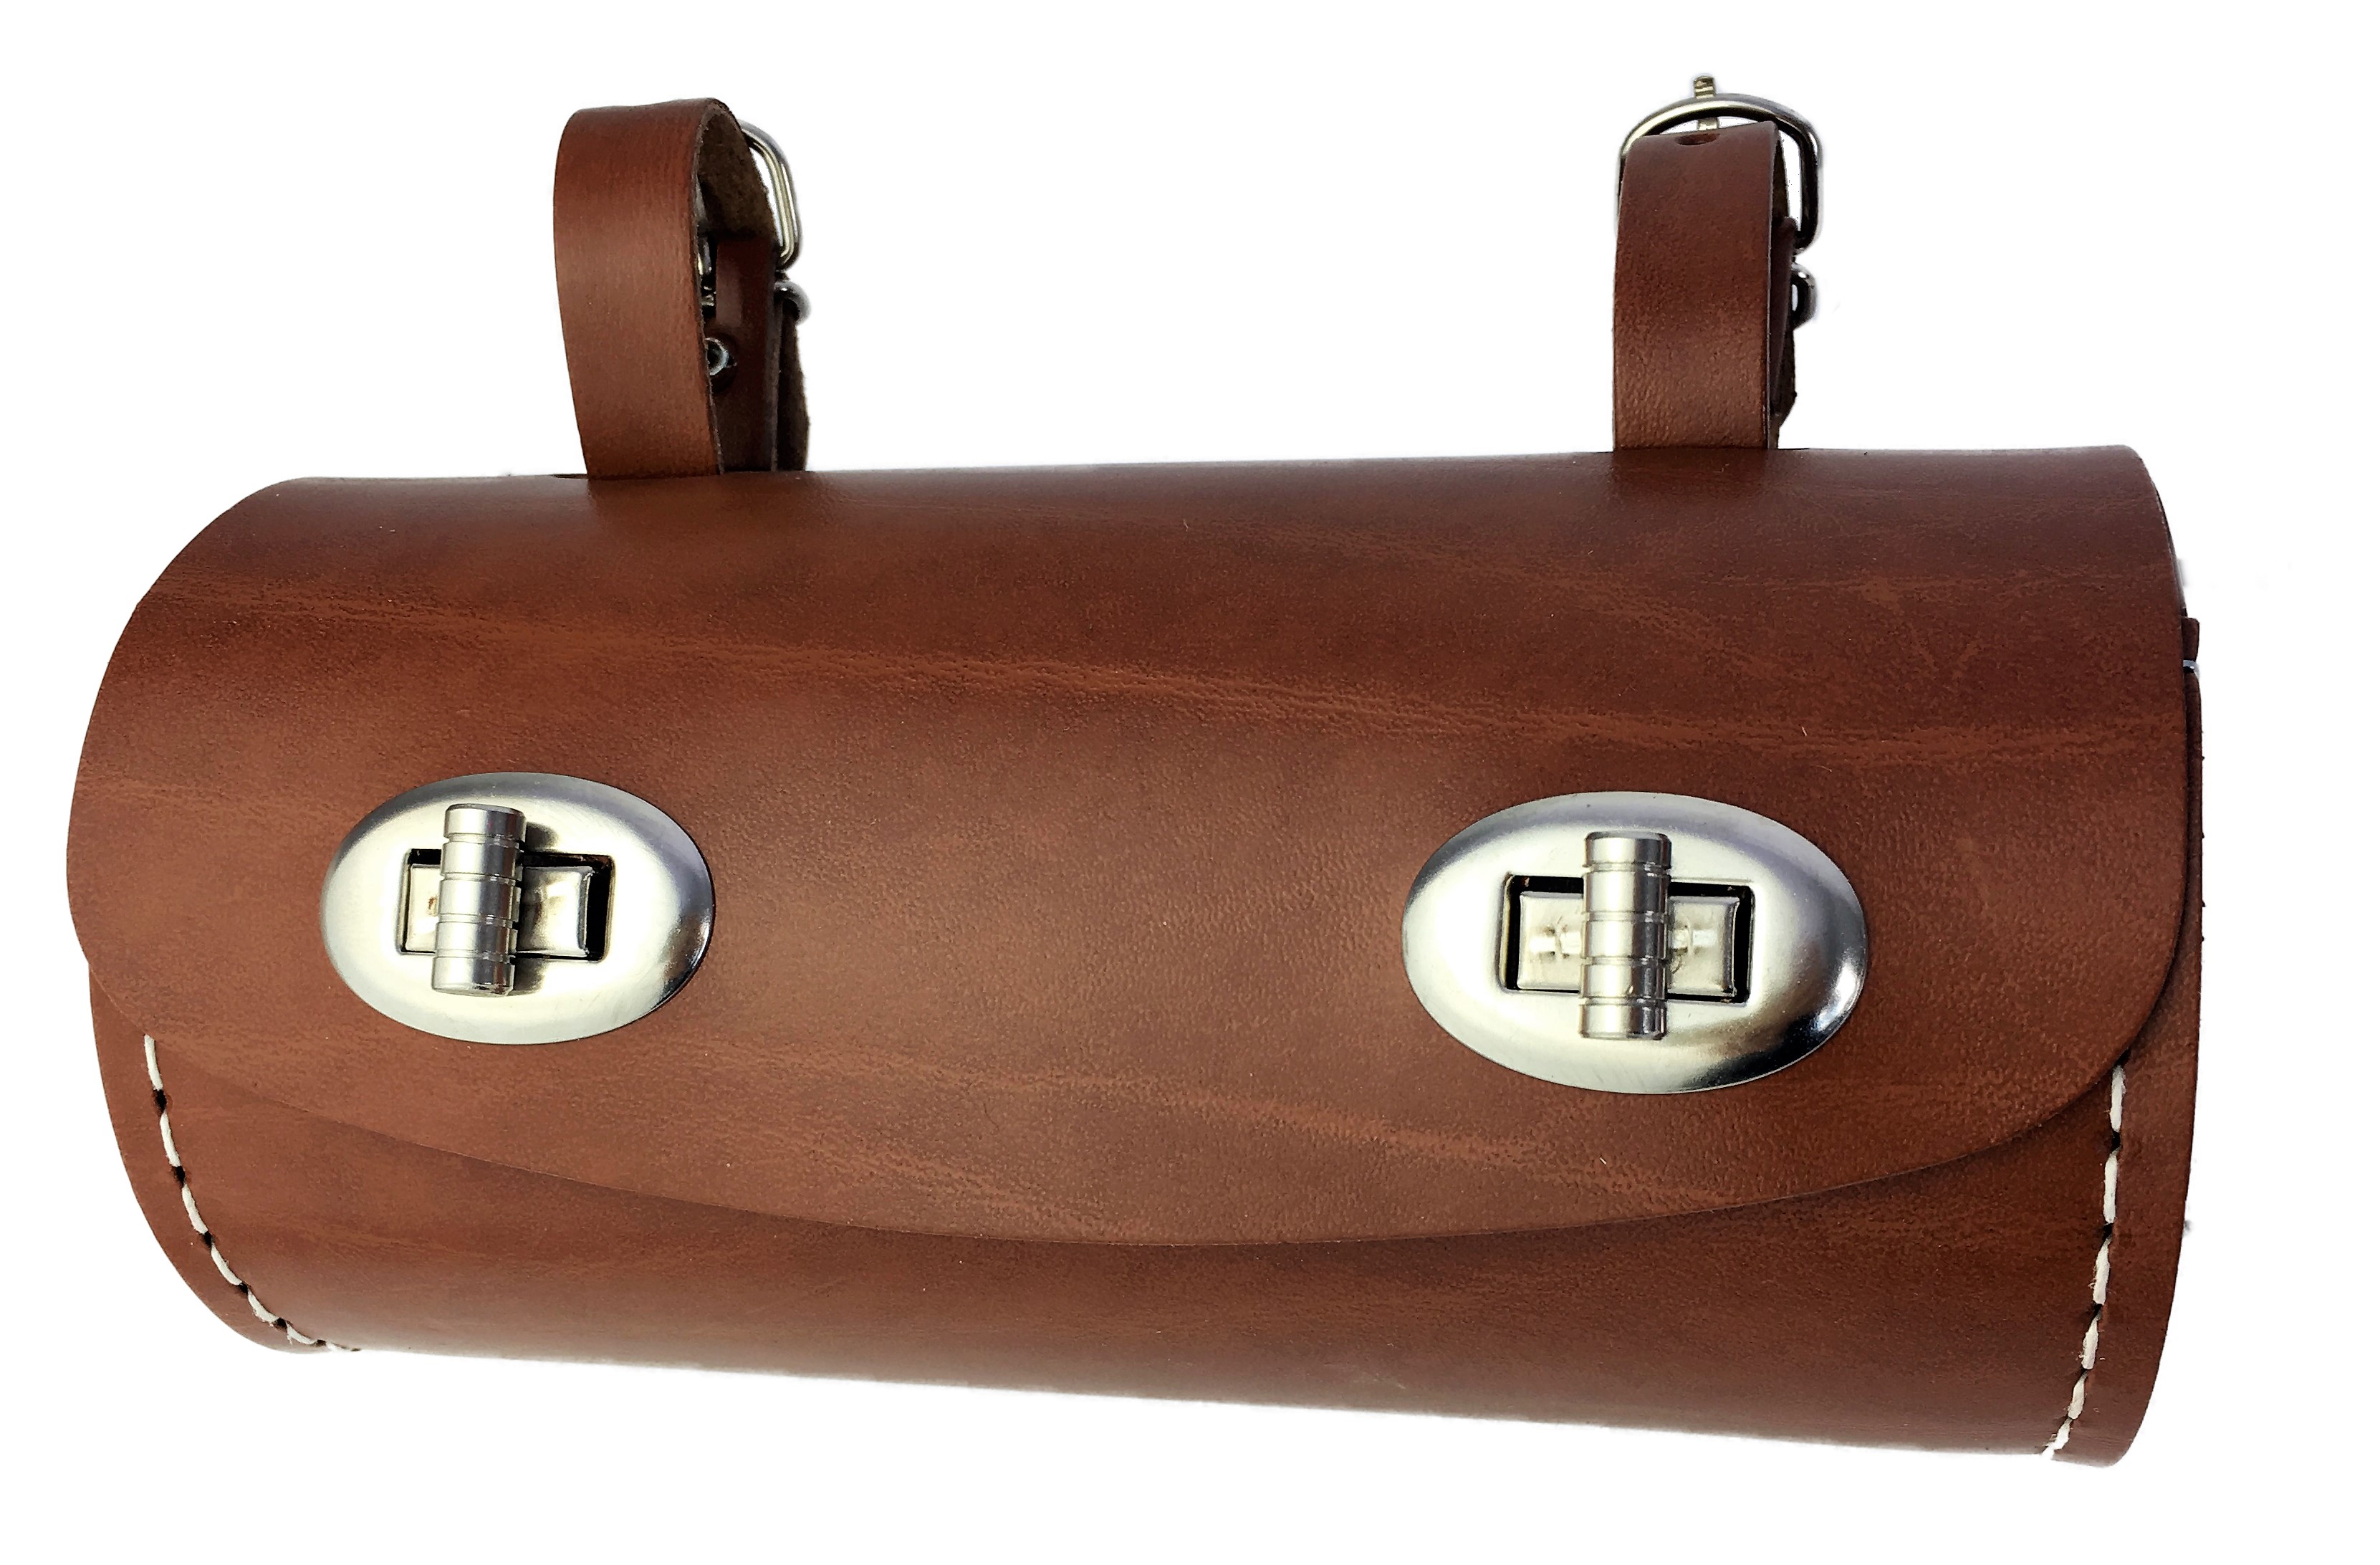 Saddlebag in barrel shape light brown